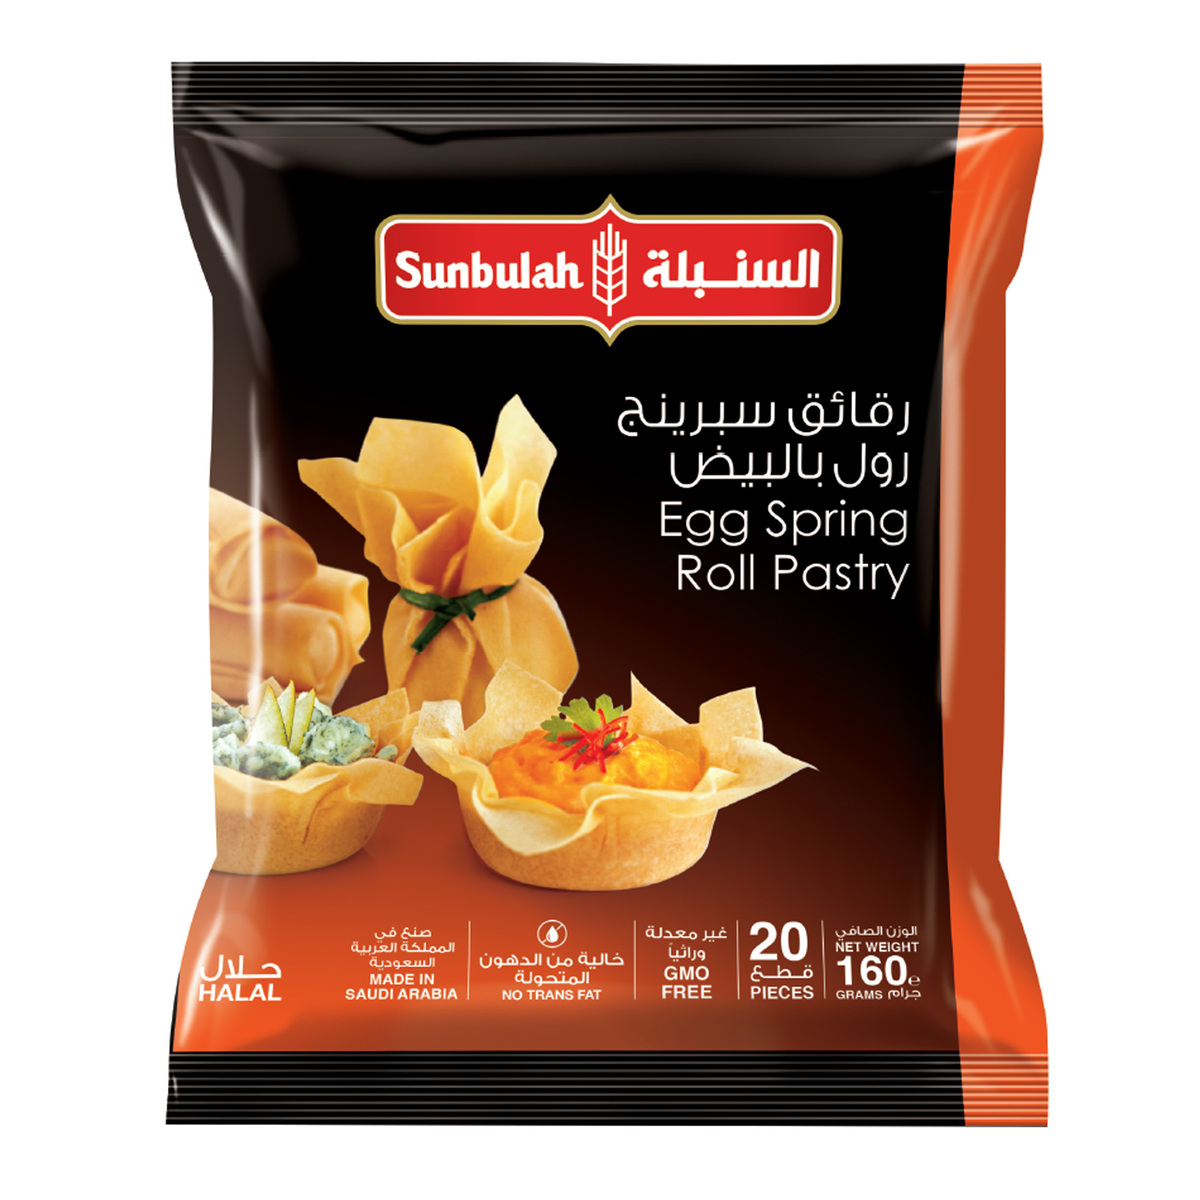 Buy Sunbulah Egg Spring Roll Pastry 160 g Online at Best Price | Frozen Pastry | Lulu UAE in UAE